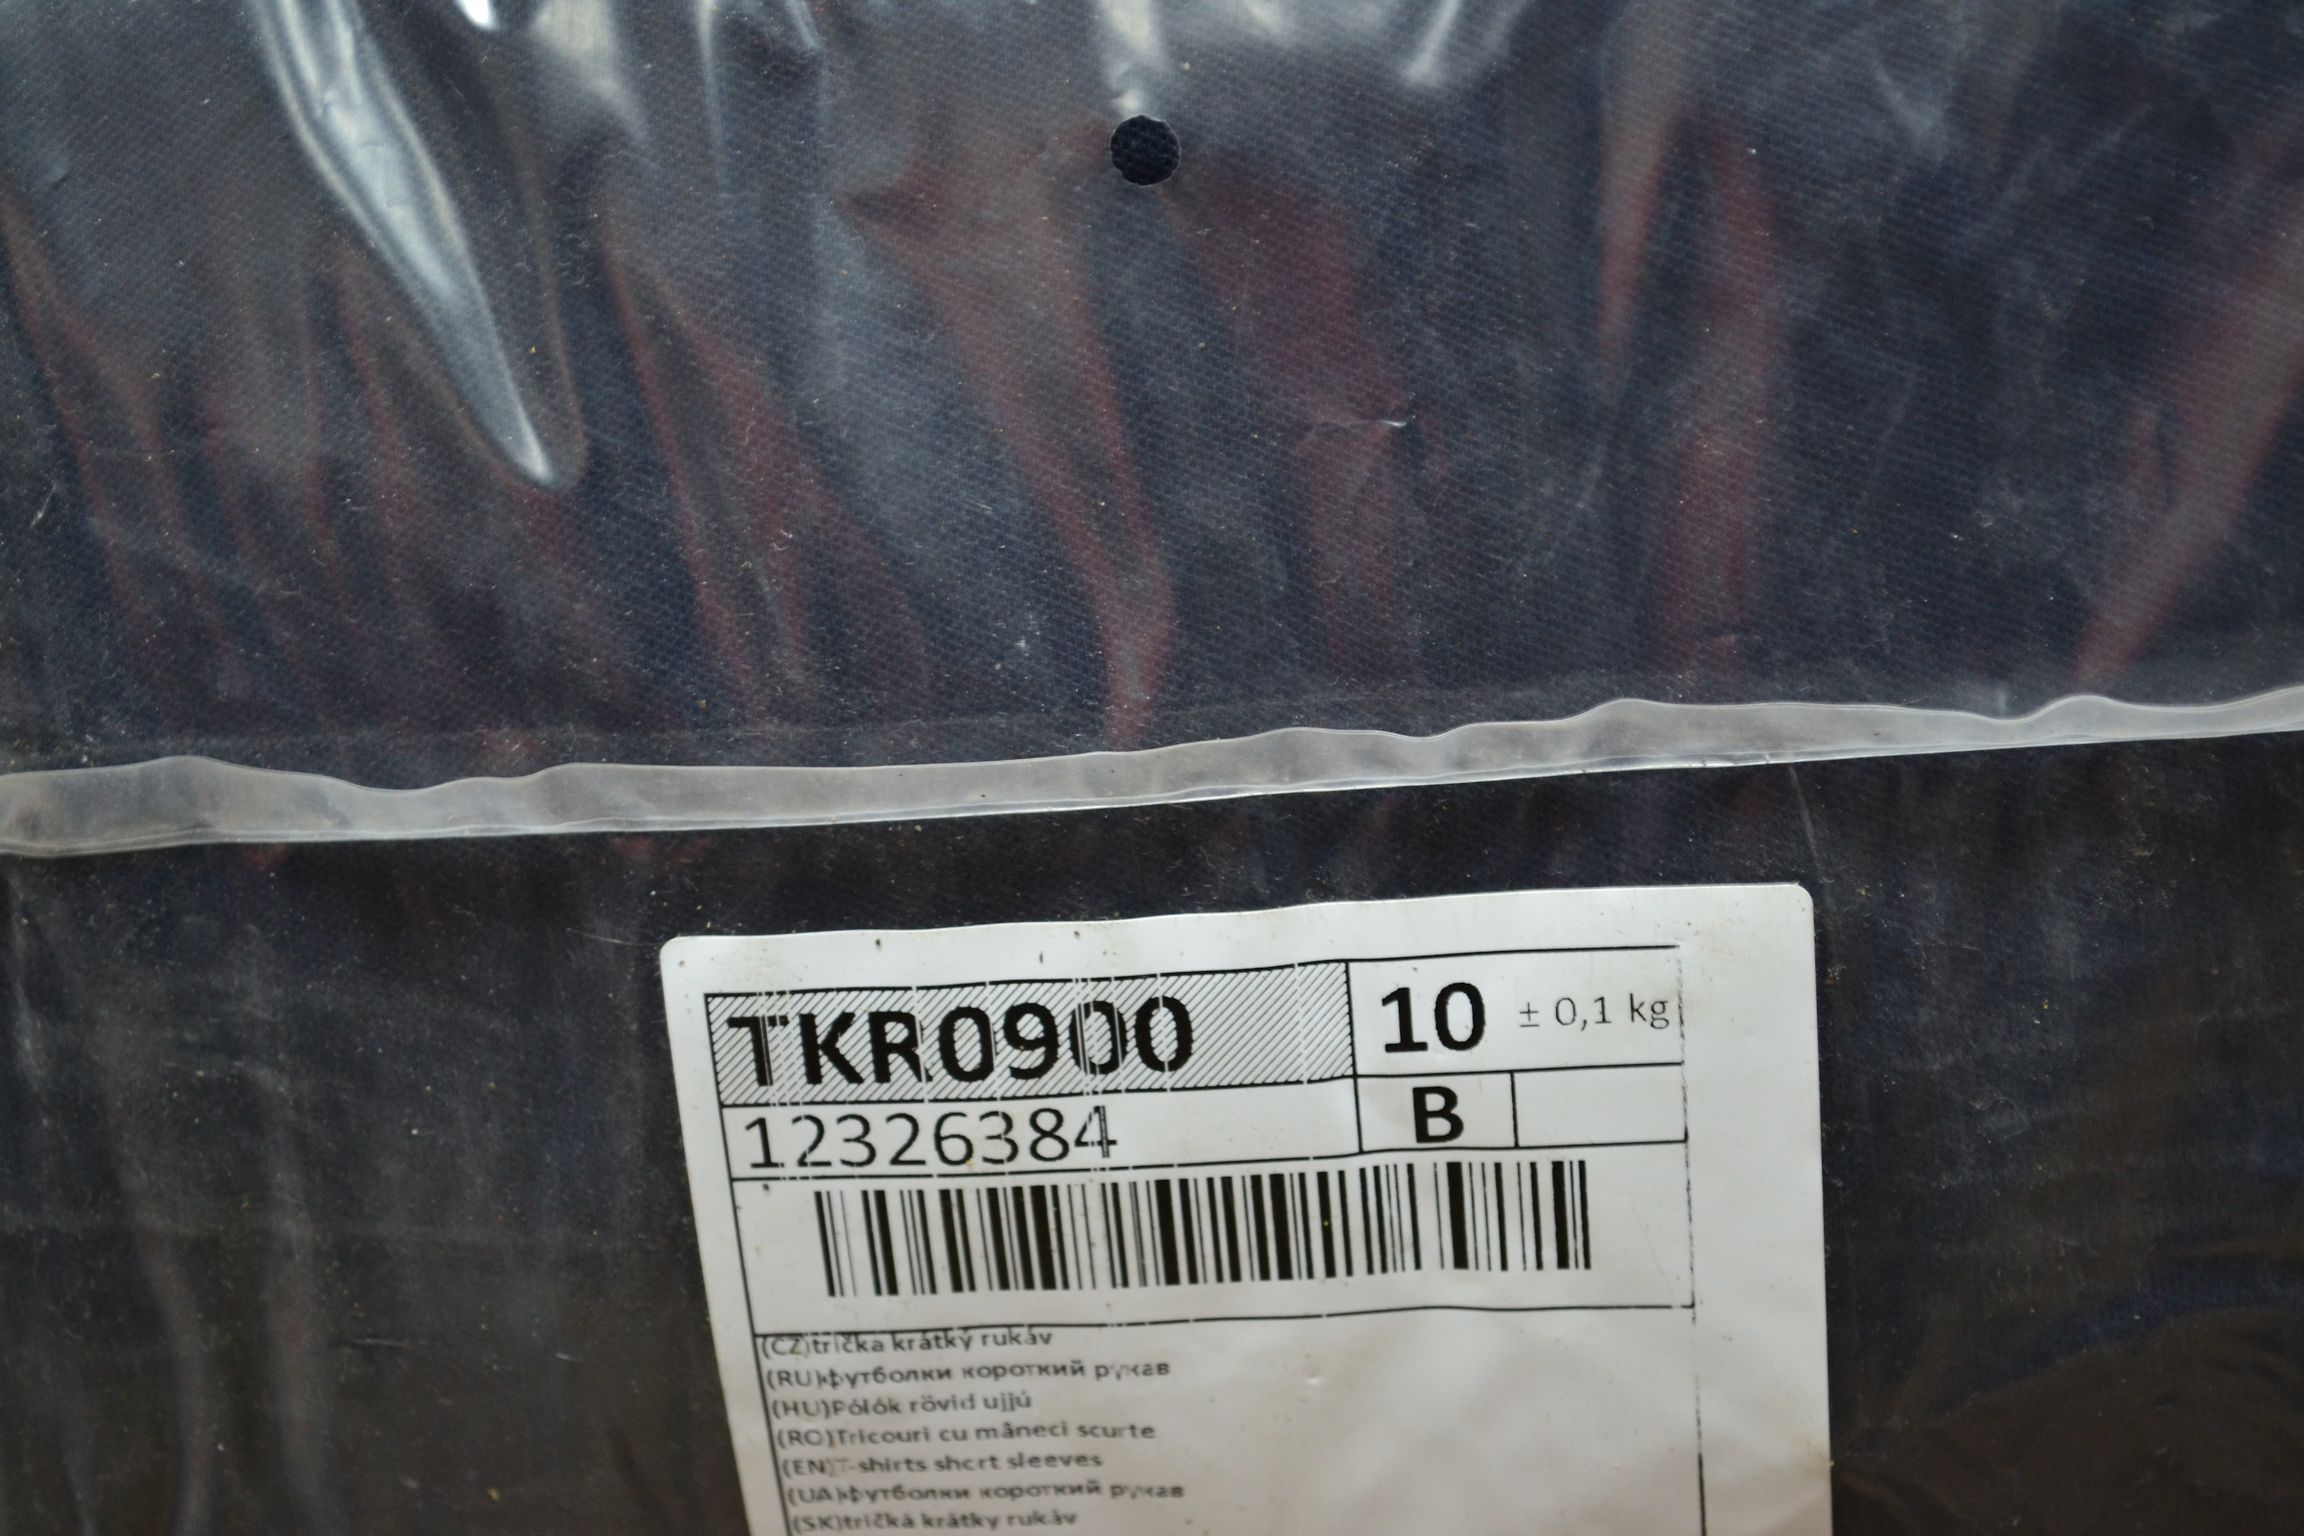 TKR0900 Майки с коротким рукавом; код мешка 12326384